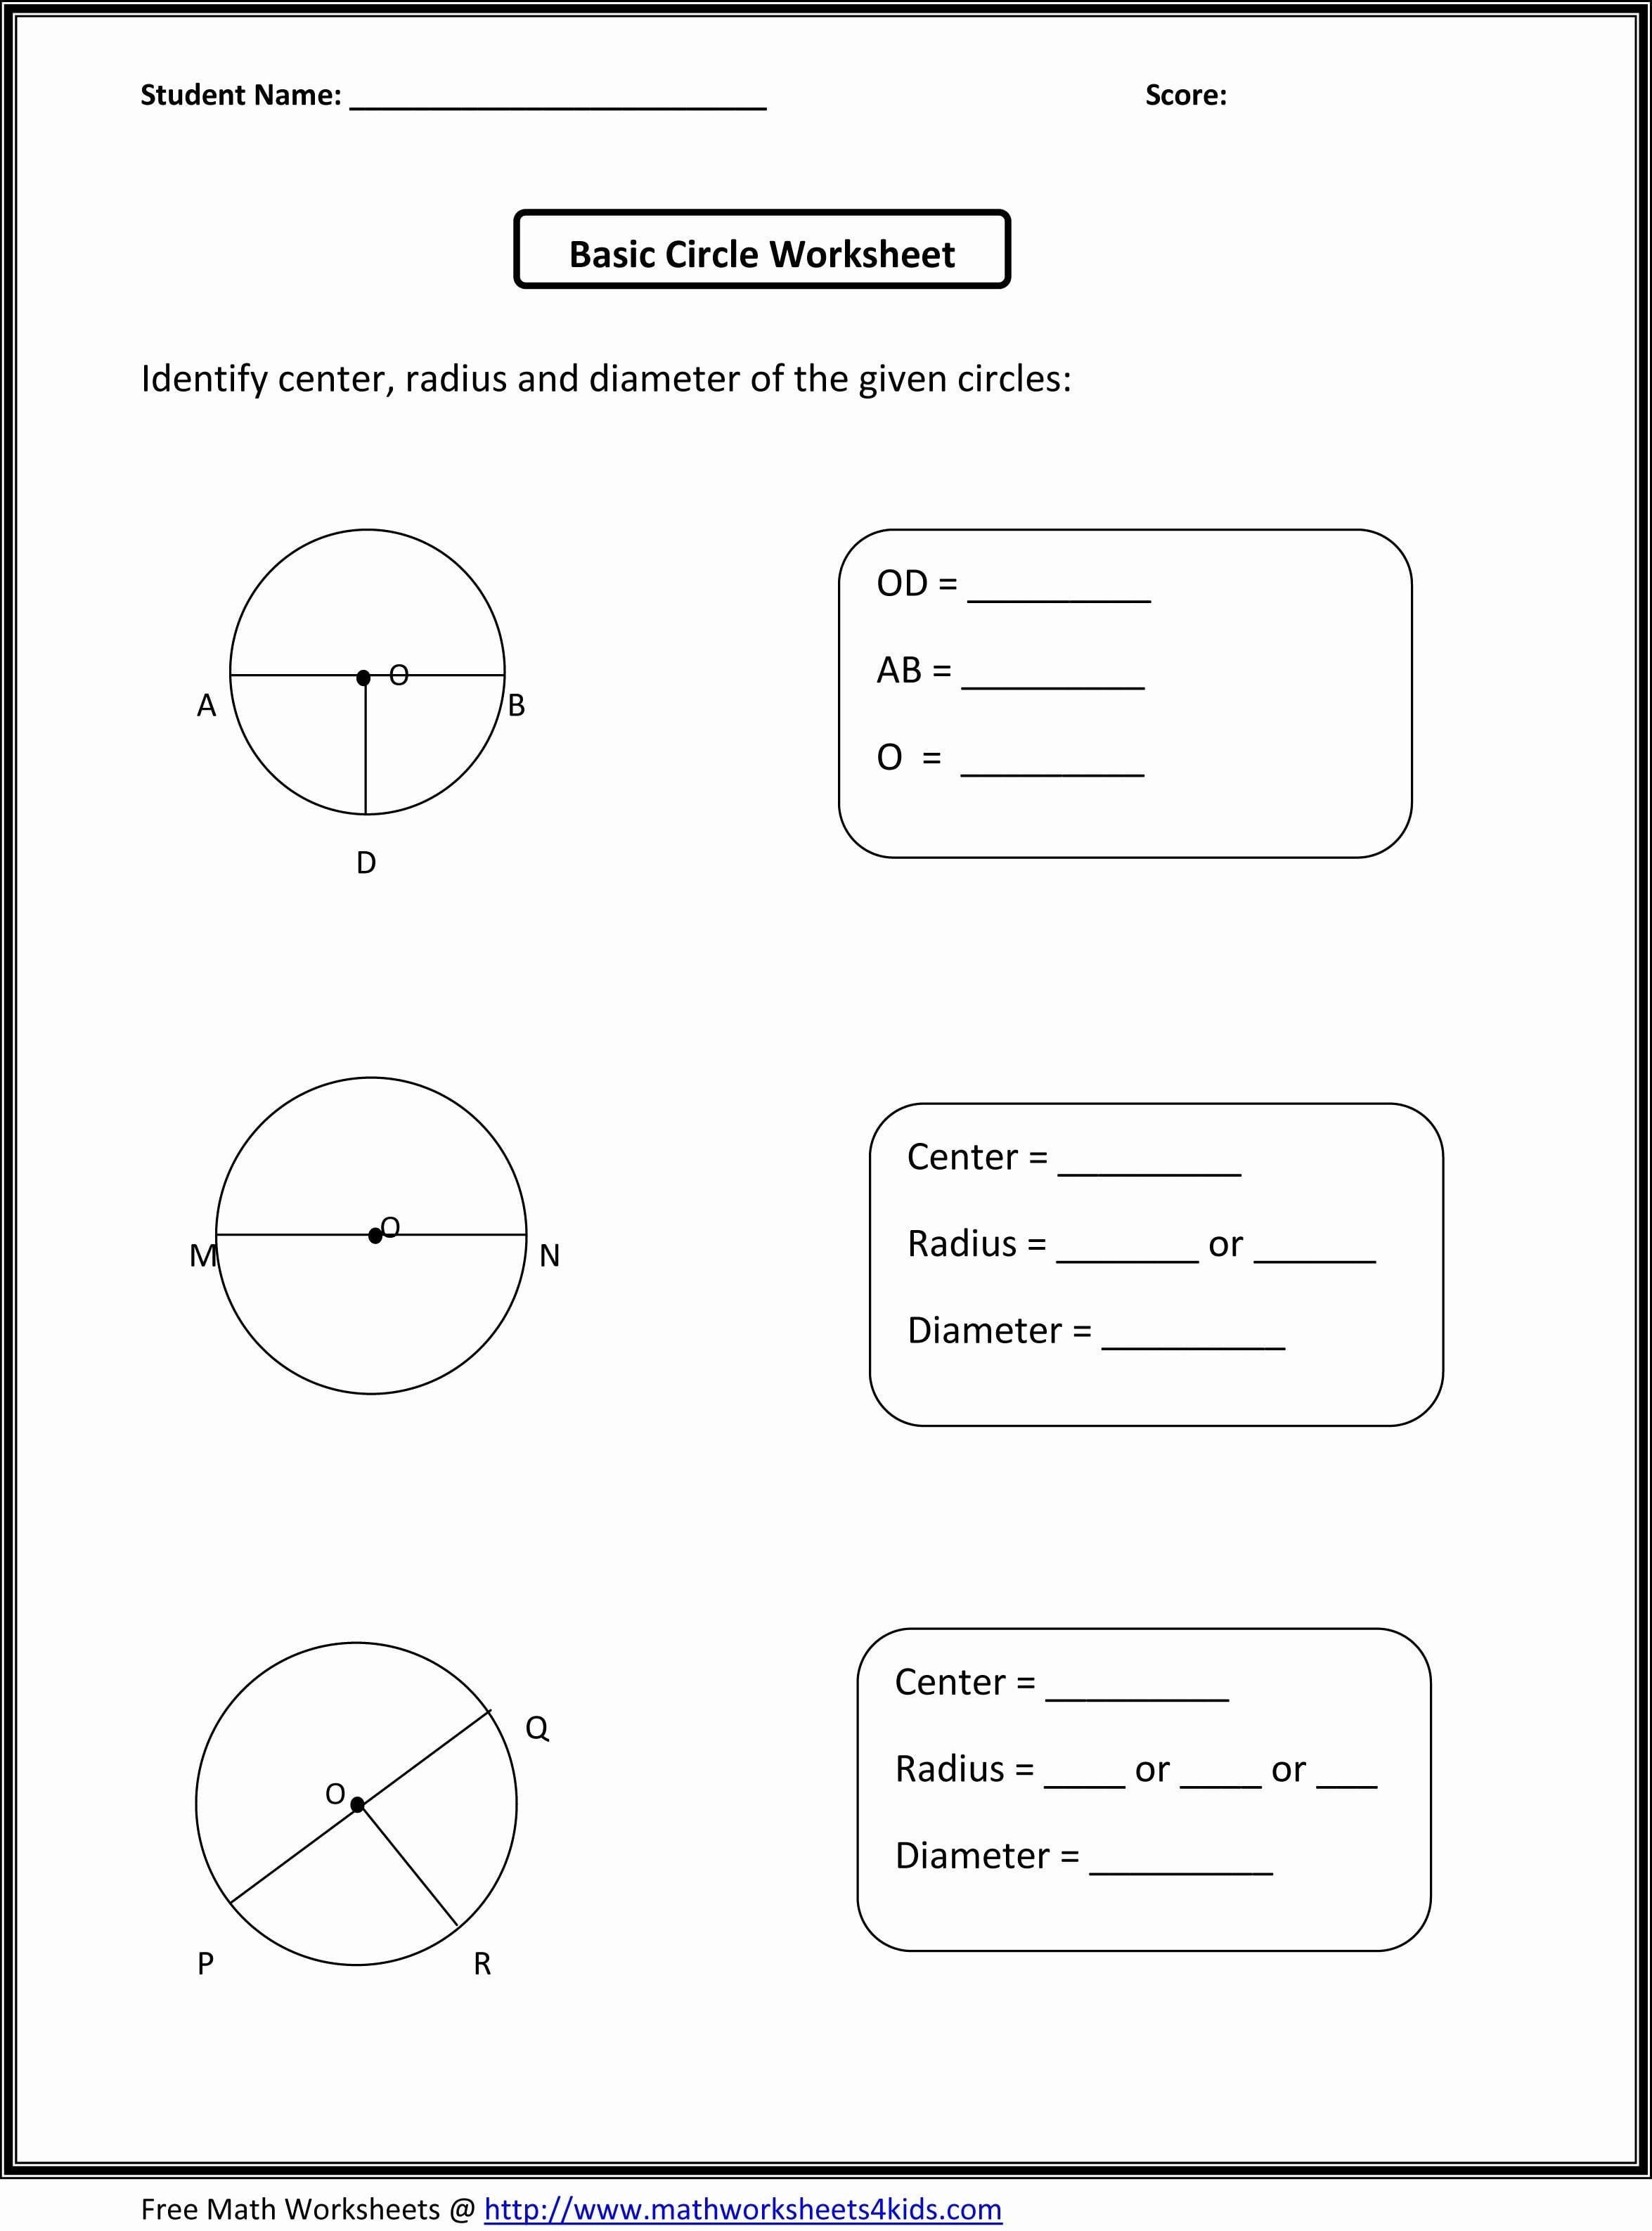 Saxon Math Math Worksheets Db excel